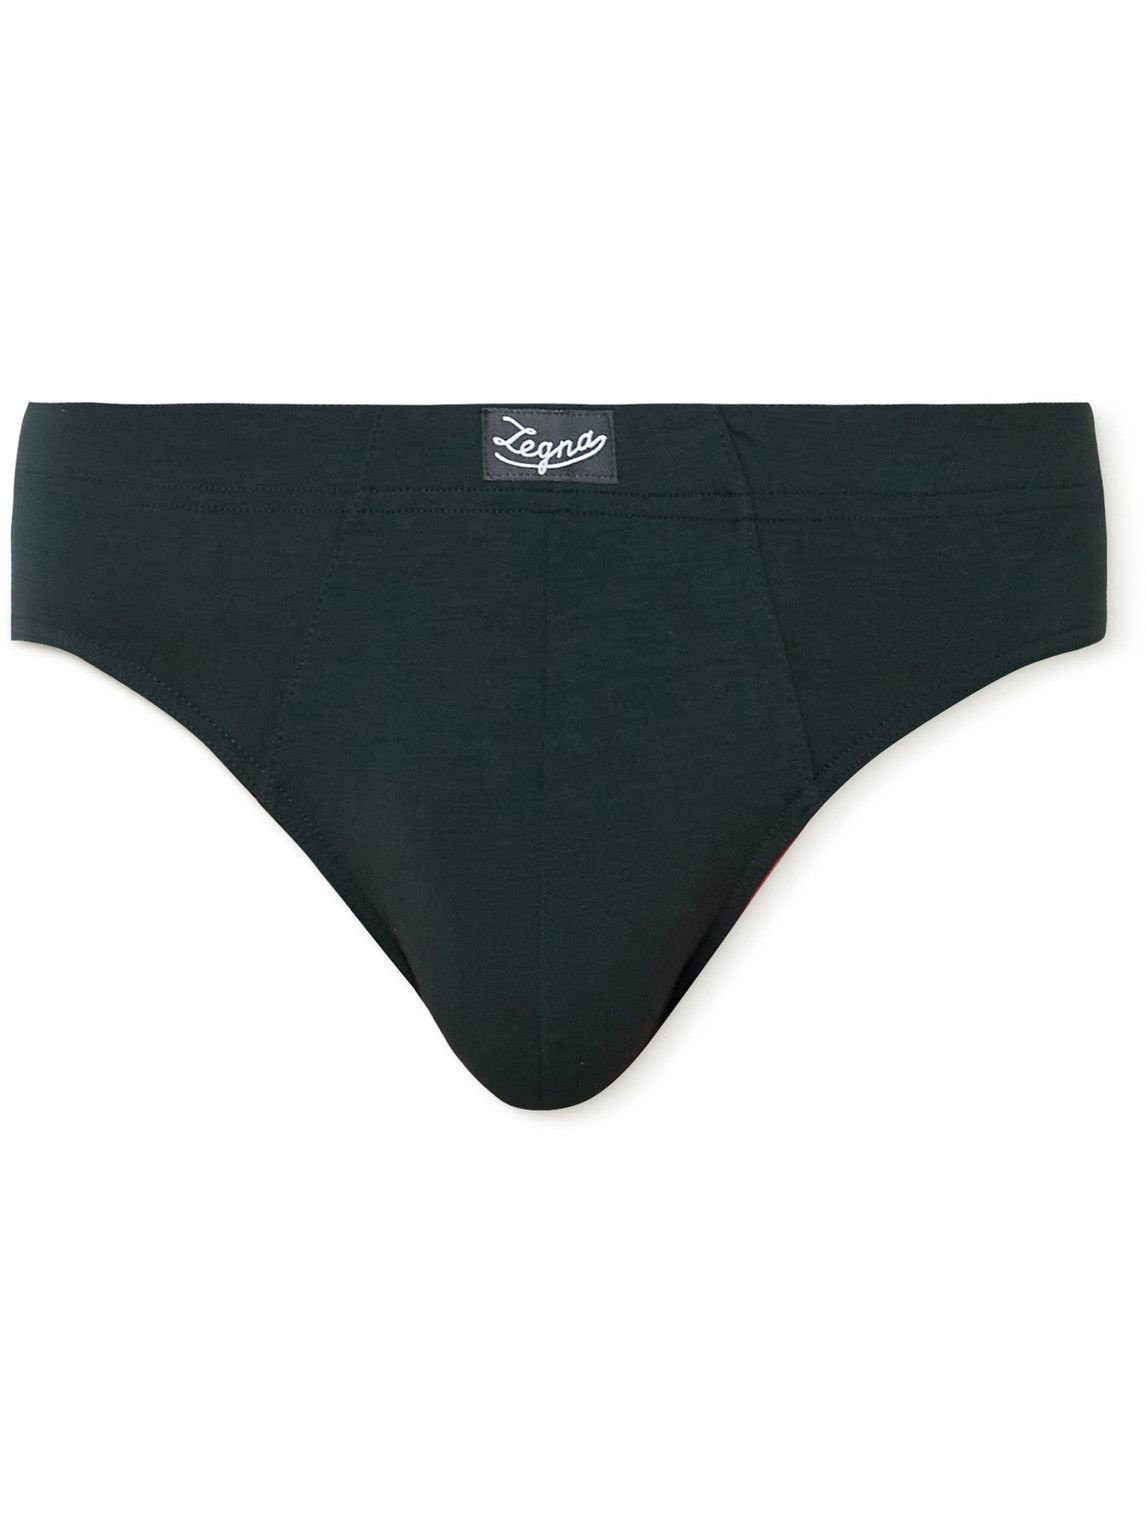 Ermenegildo Zegna Underwear Black Stretch L Cotton Midi Brief 2 Pack - Tie  Deals